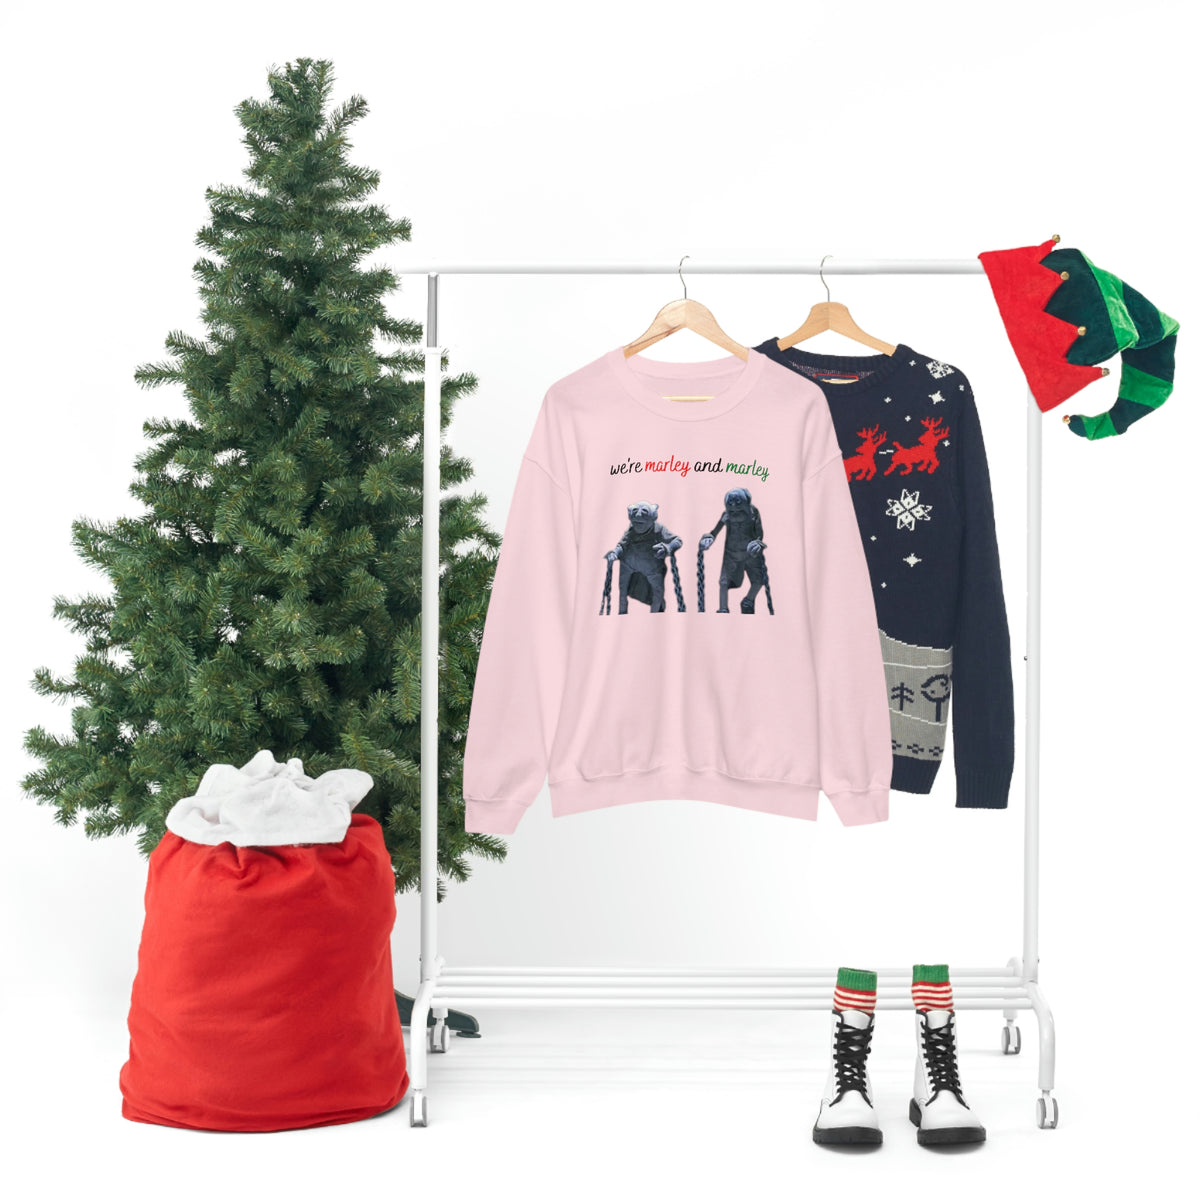 Marley and Marley shirt, Muppet Christmas shirt, Christmas party, Holiday crewneck, Christmas shirt, Funny Christmas shirt, ugly sweater